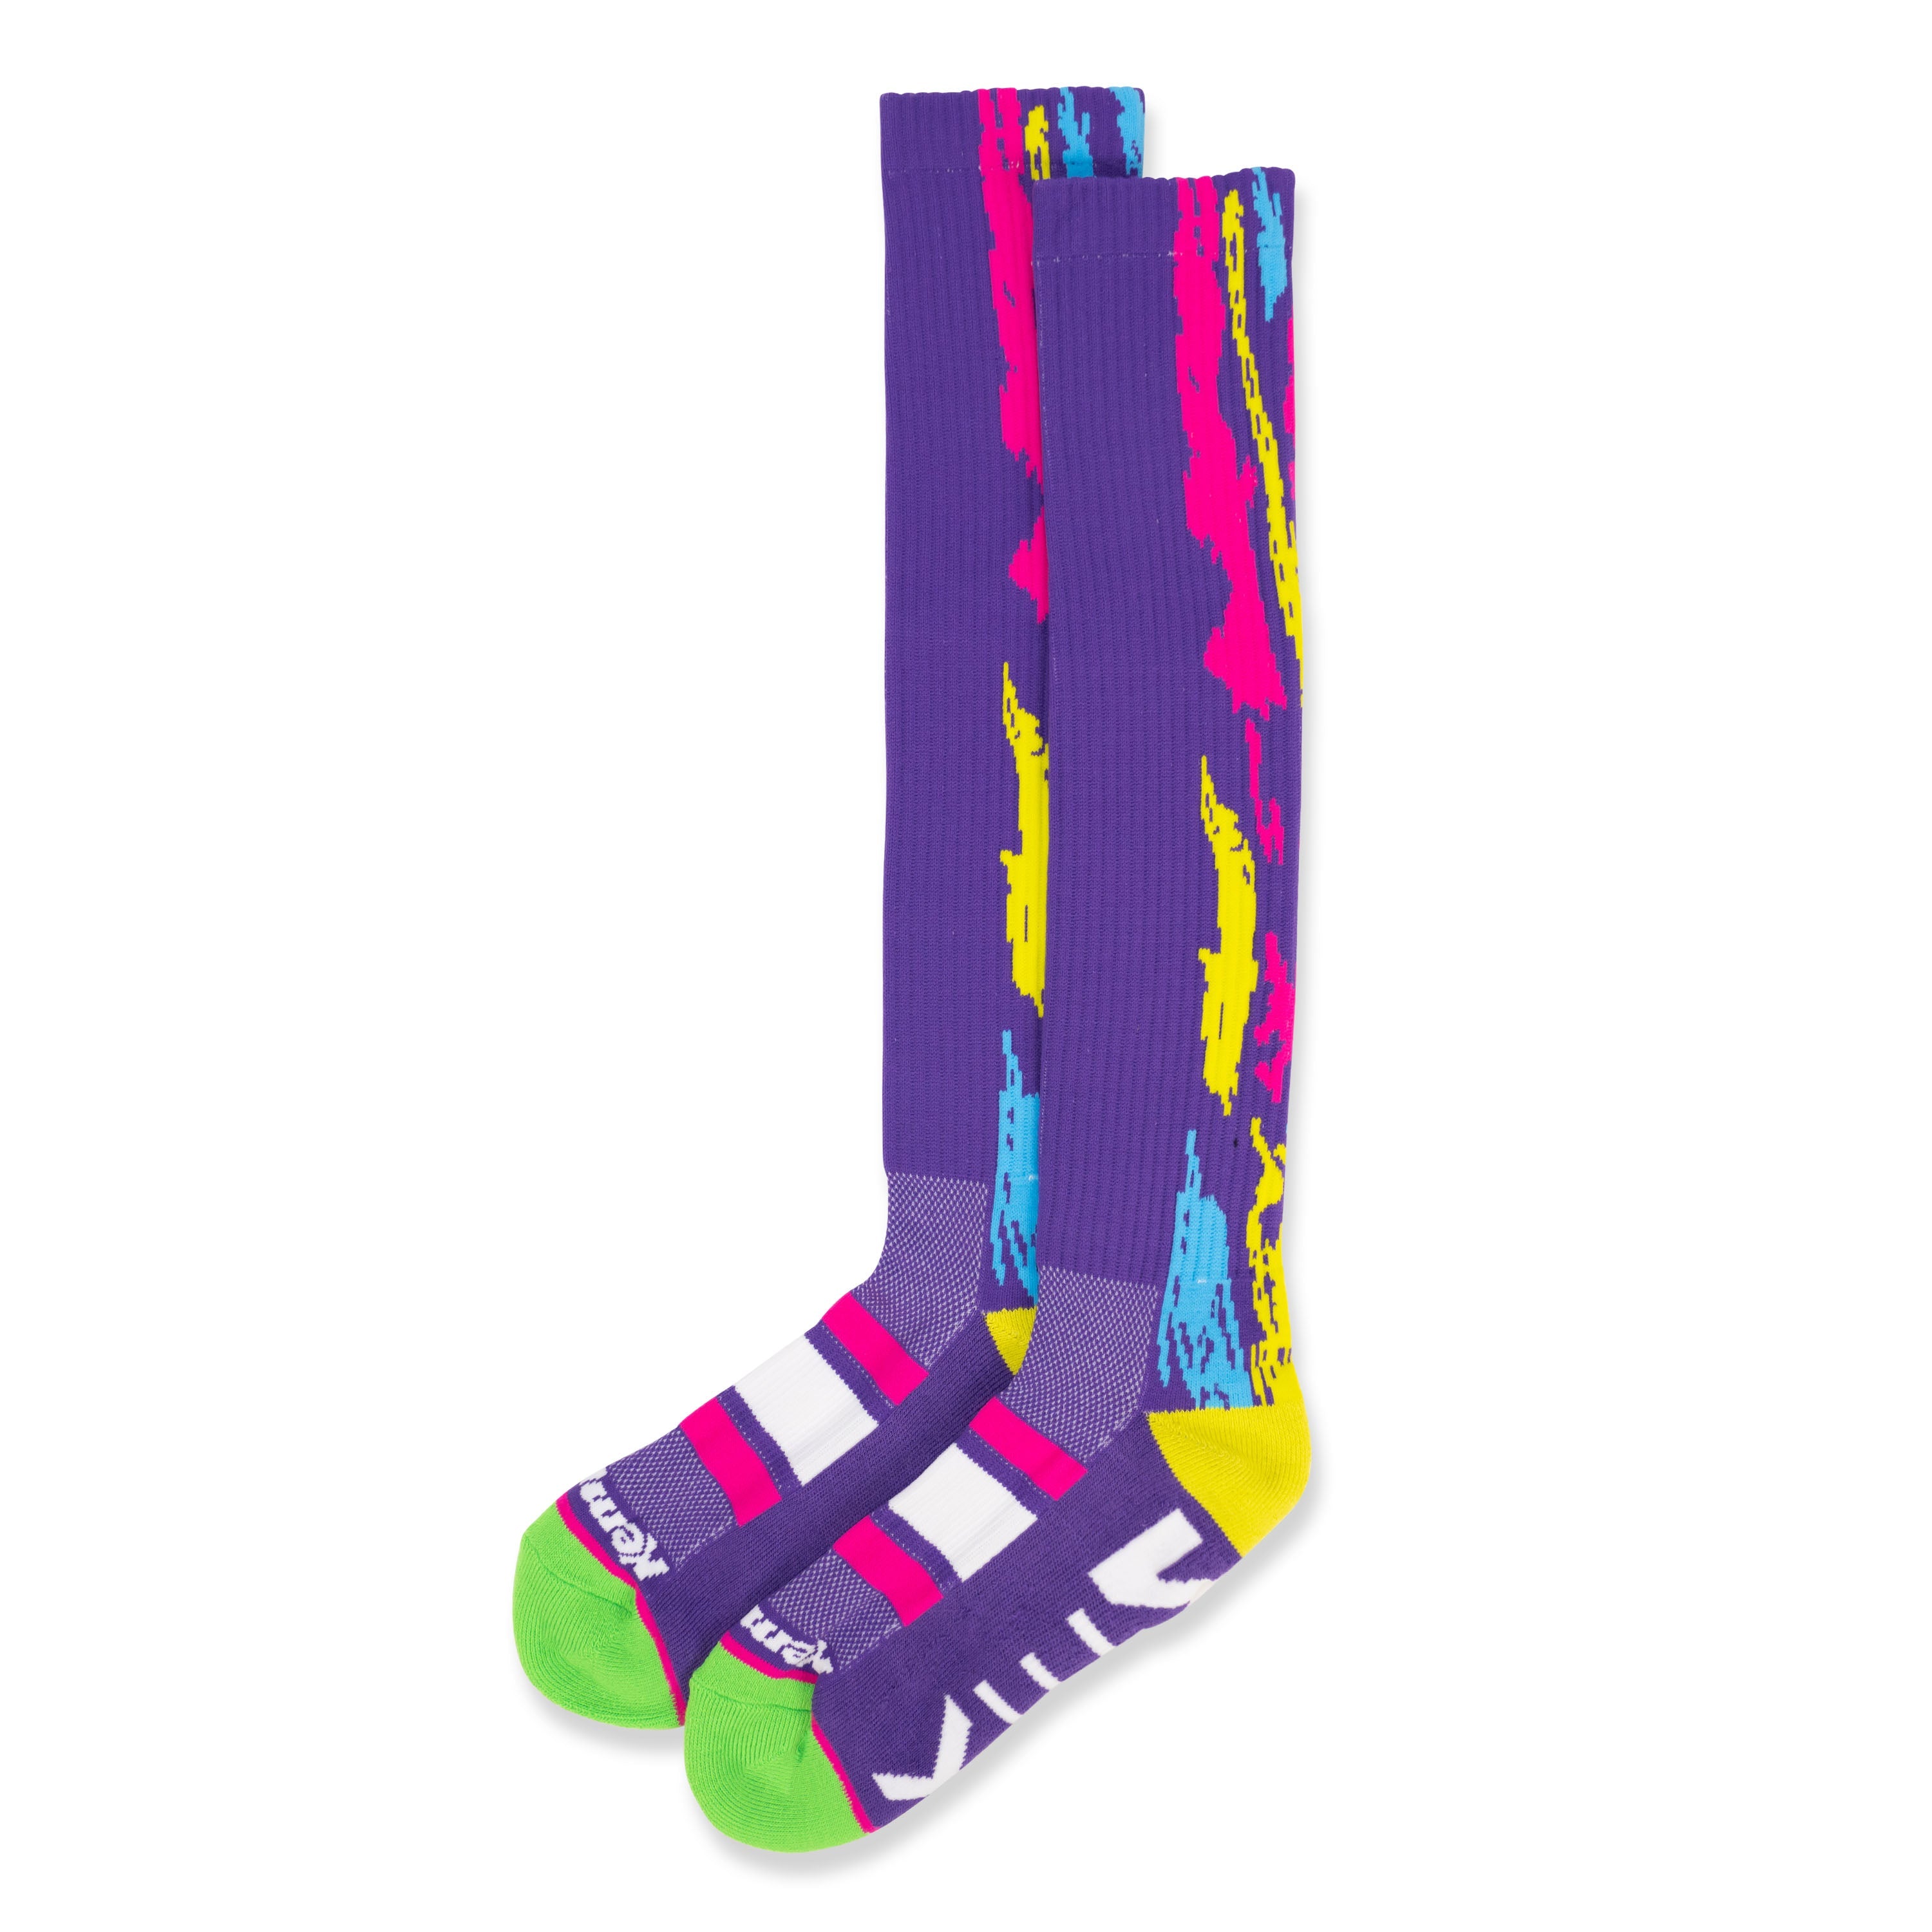 Kemper Snowboards Rampage Knee Snowboard Sock